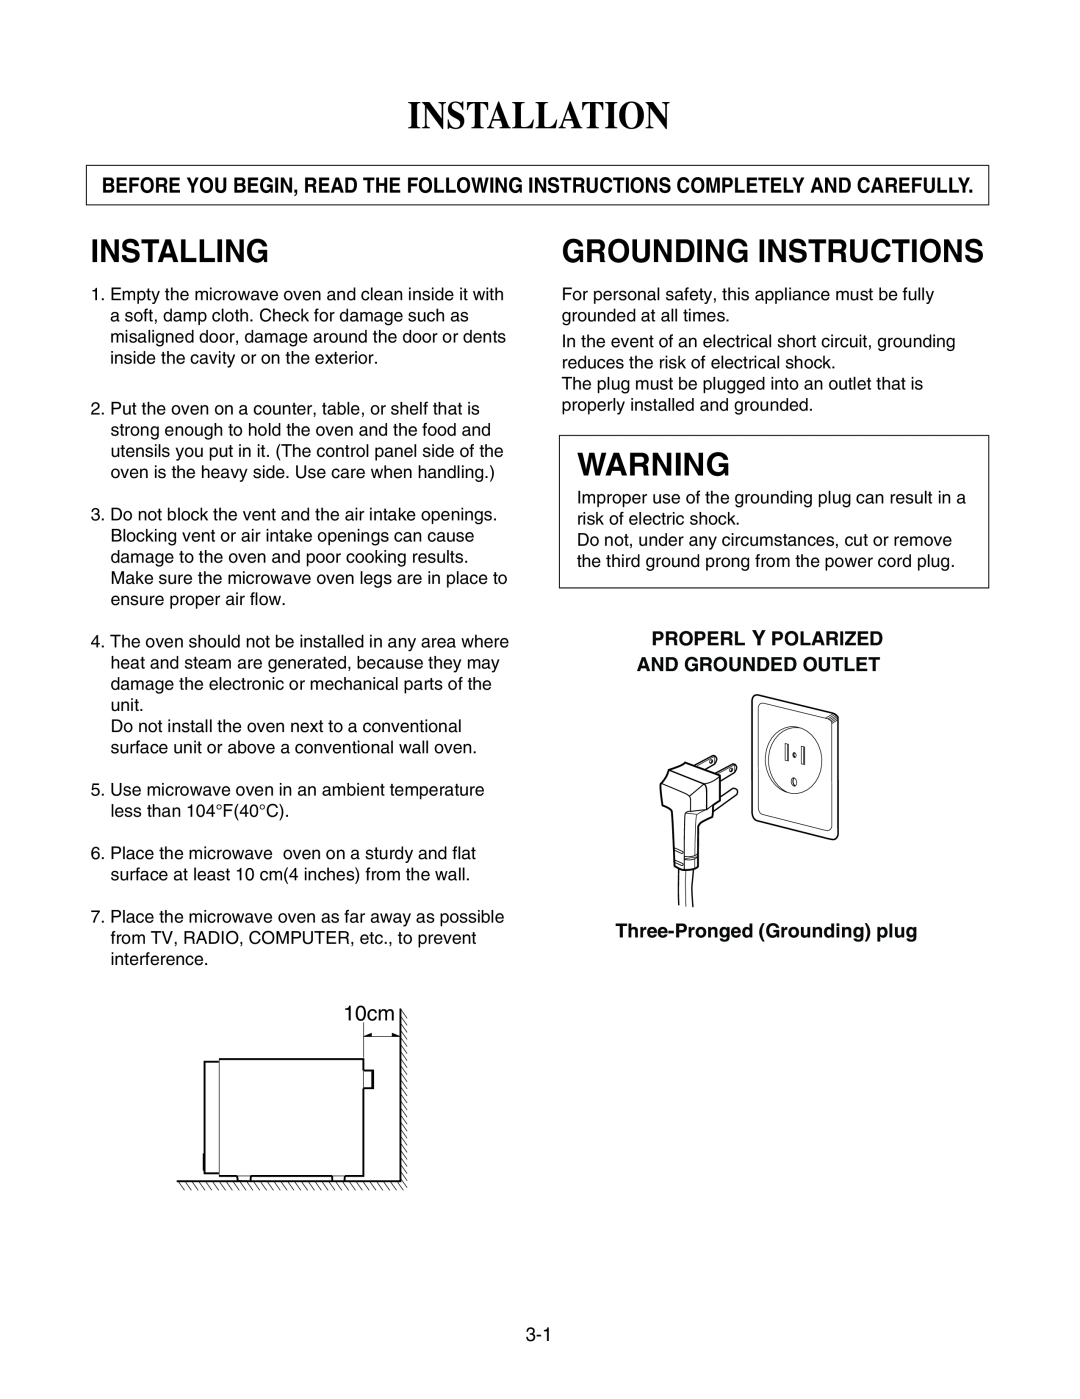 GE LMAB1240ST service manual Installation, Installing, Grounding Instructions, 10cm 